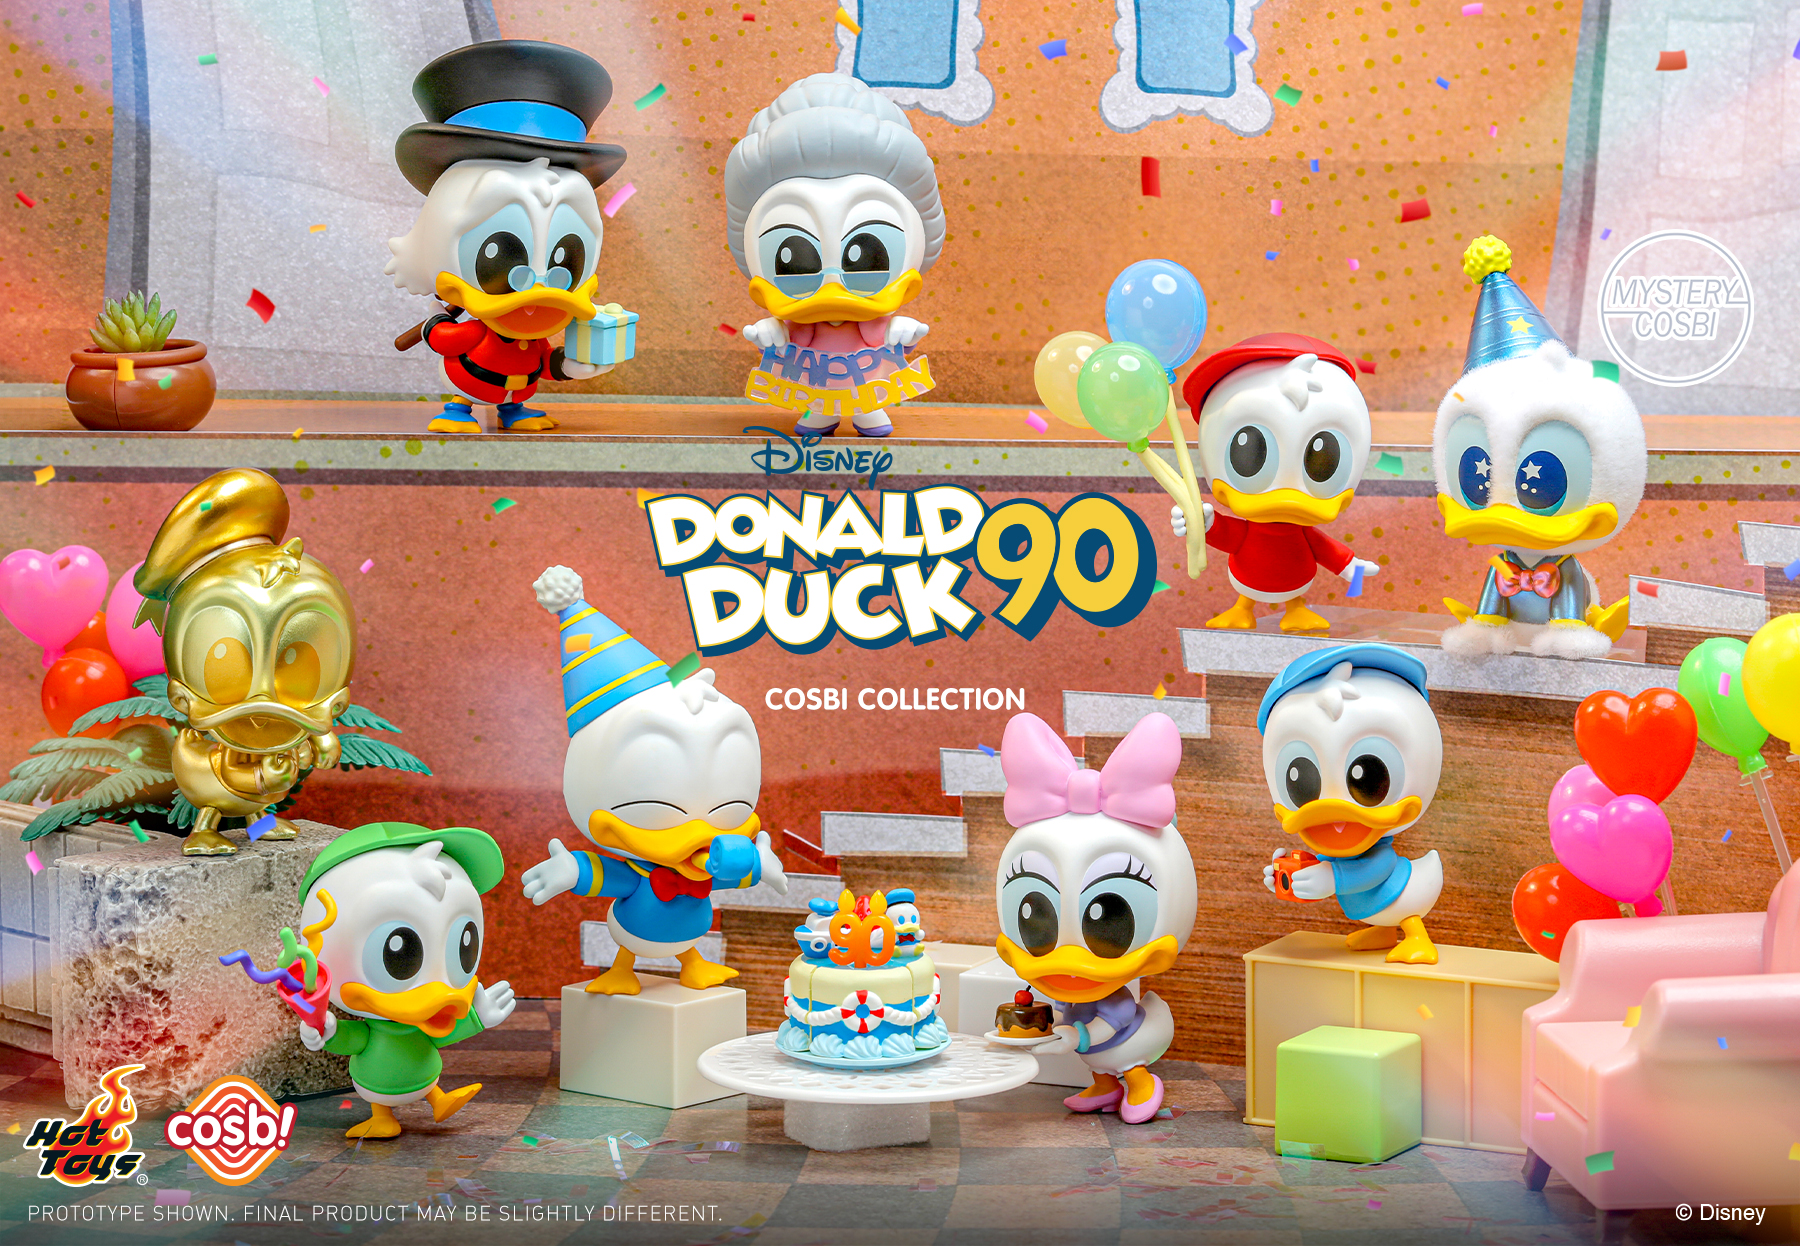 CBX178 - Hot Toys - Donald Duck Birthday Cosbi_PR1